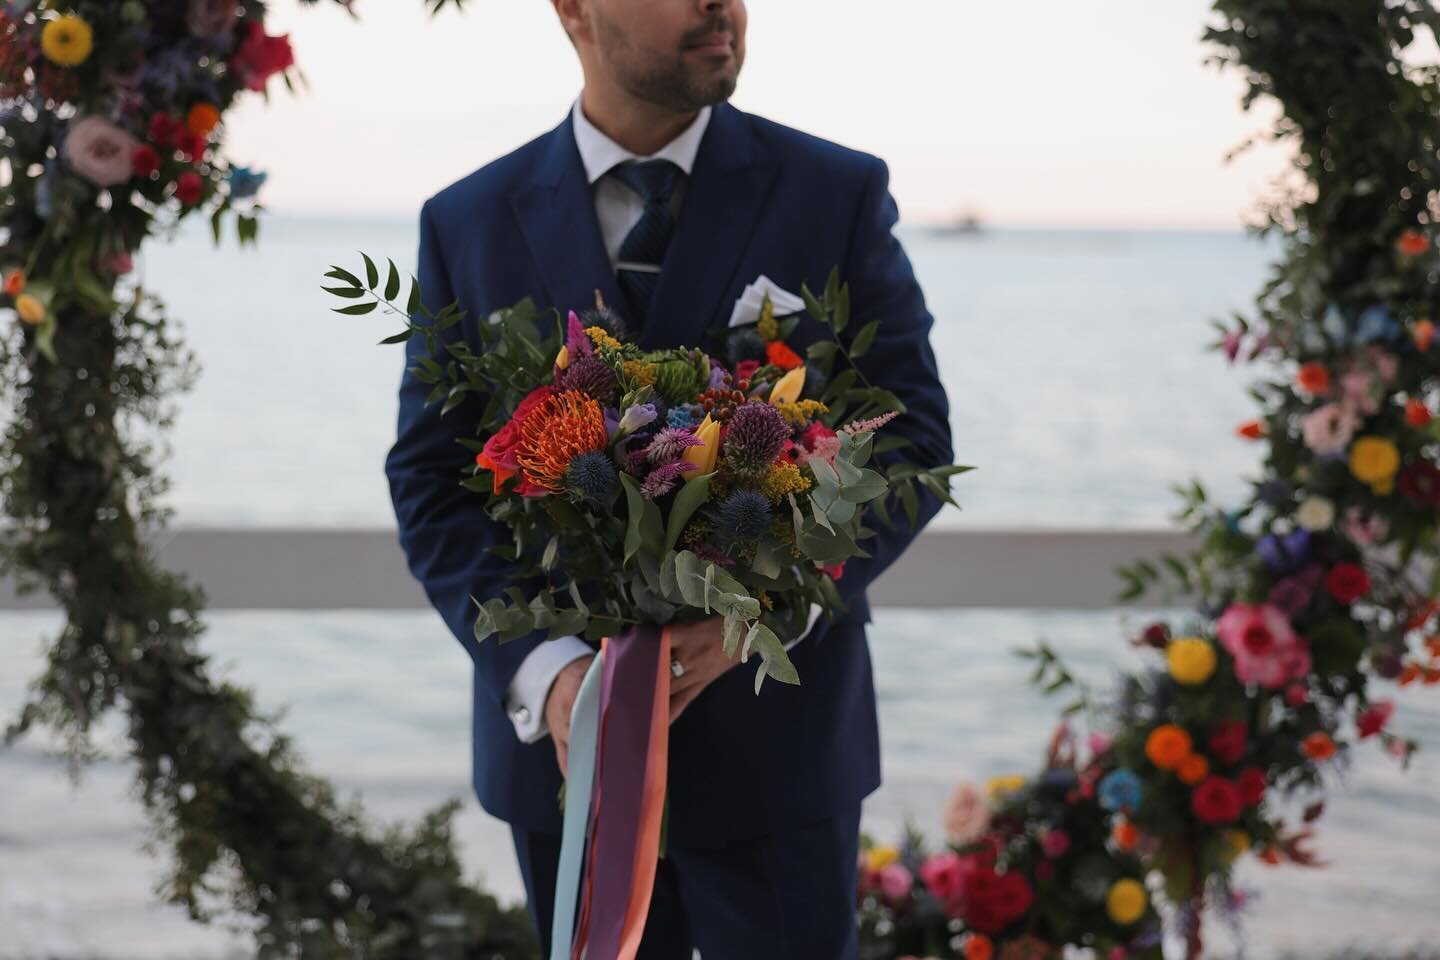 When color meets love.
Decoration @nolmari
Venue @galuseaside 

#evotionphotography 
#civilwedding #weddingphotography 
#cyprusphotographer